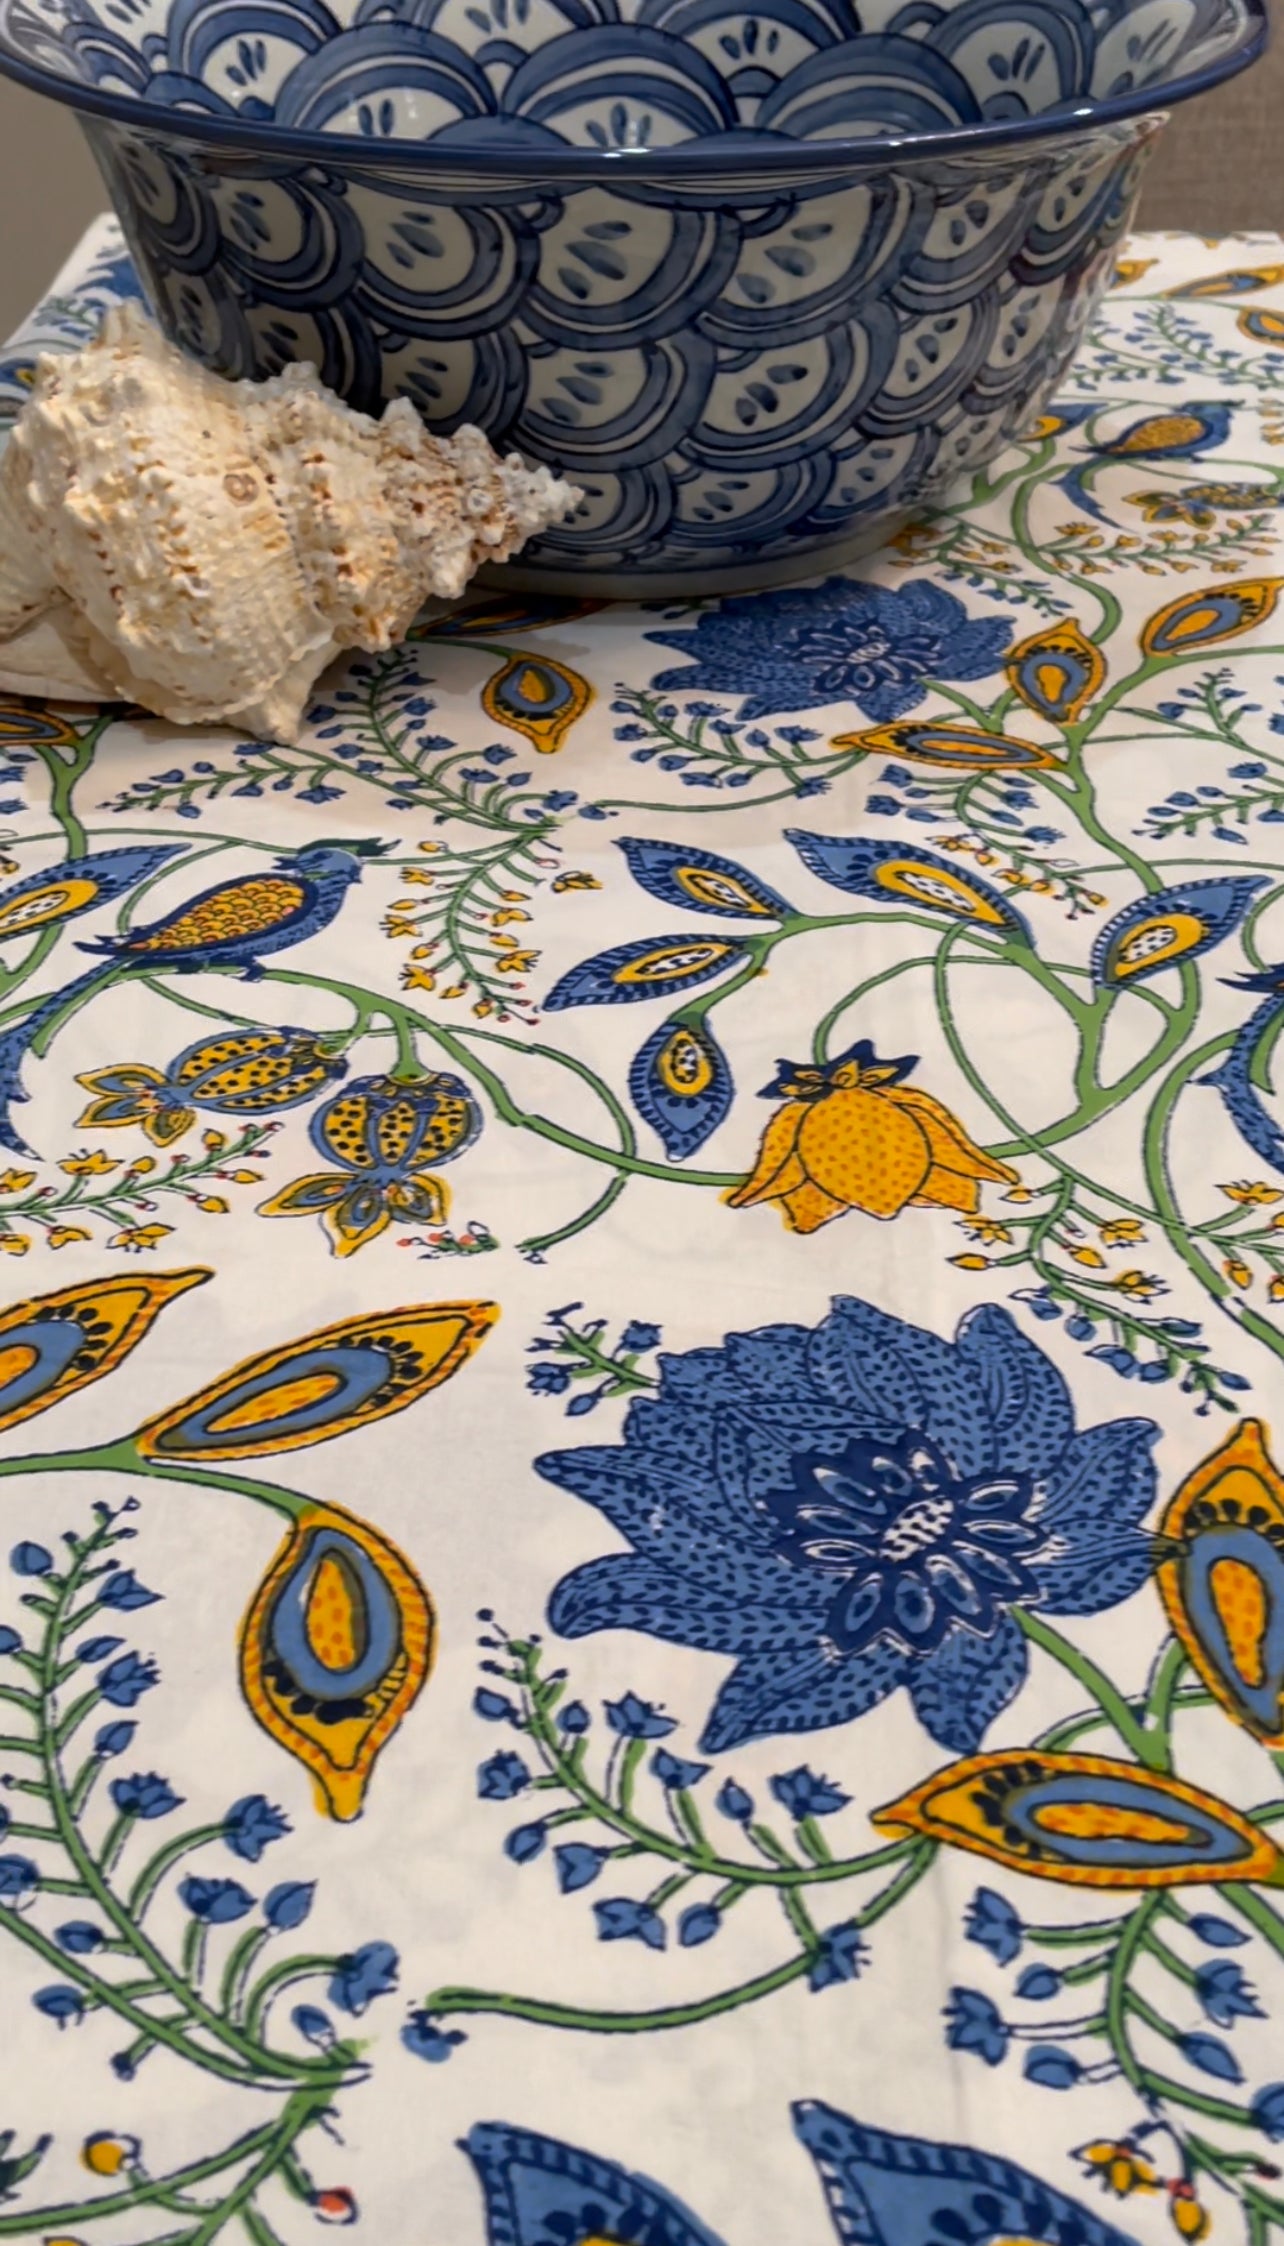 Monet's Kitchen Tablecloth